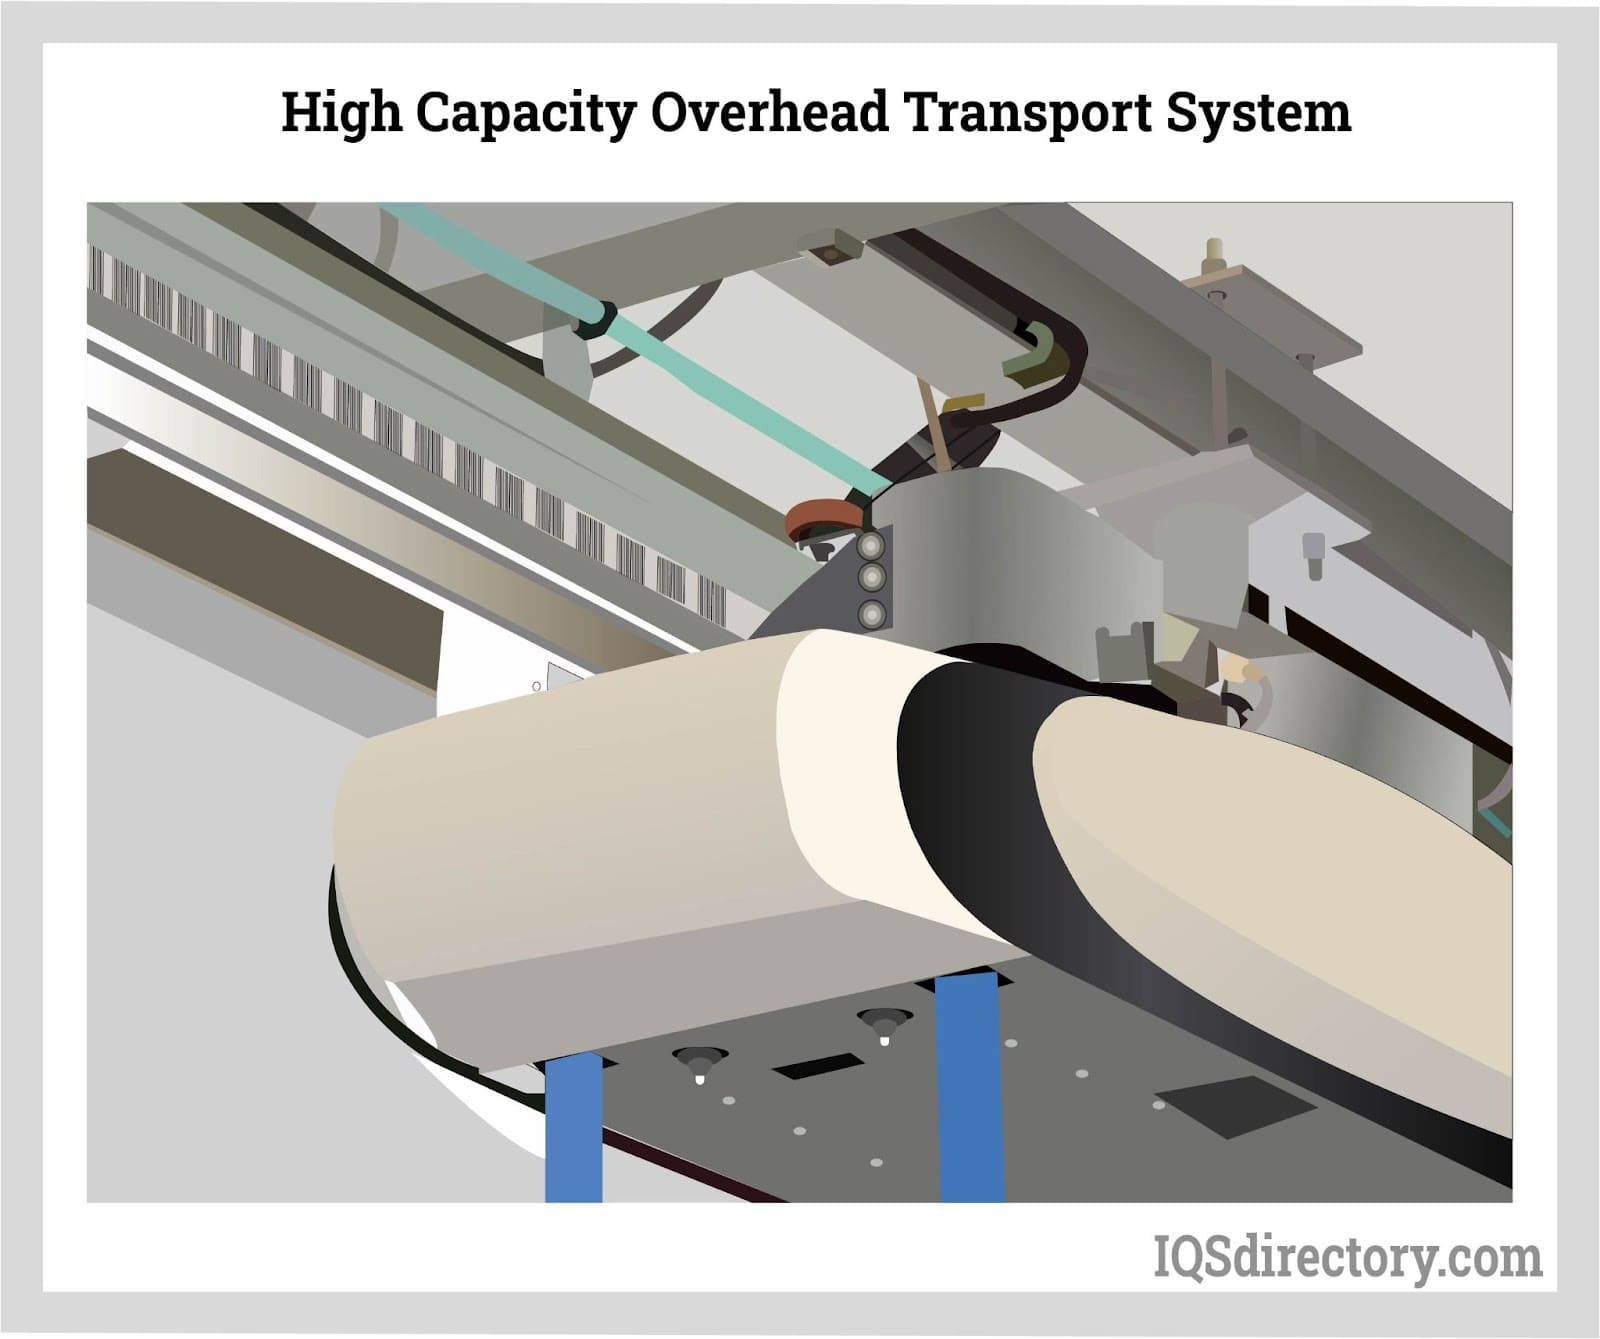 High Capacity Overhead Transport System